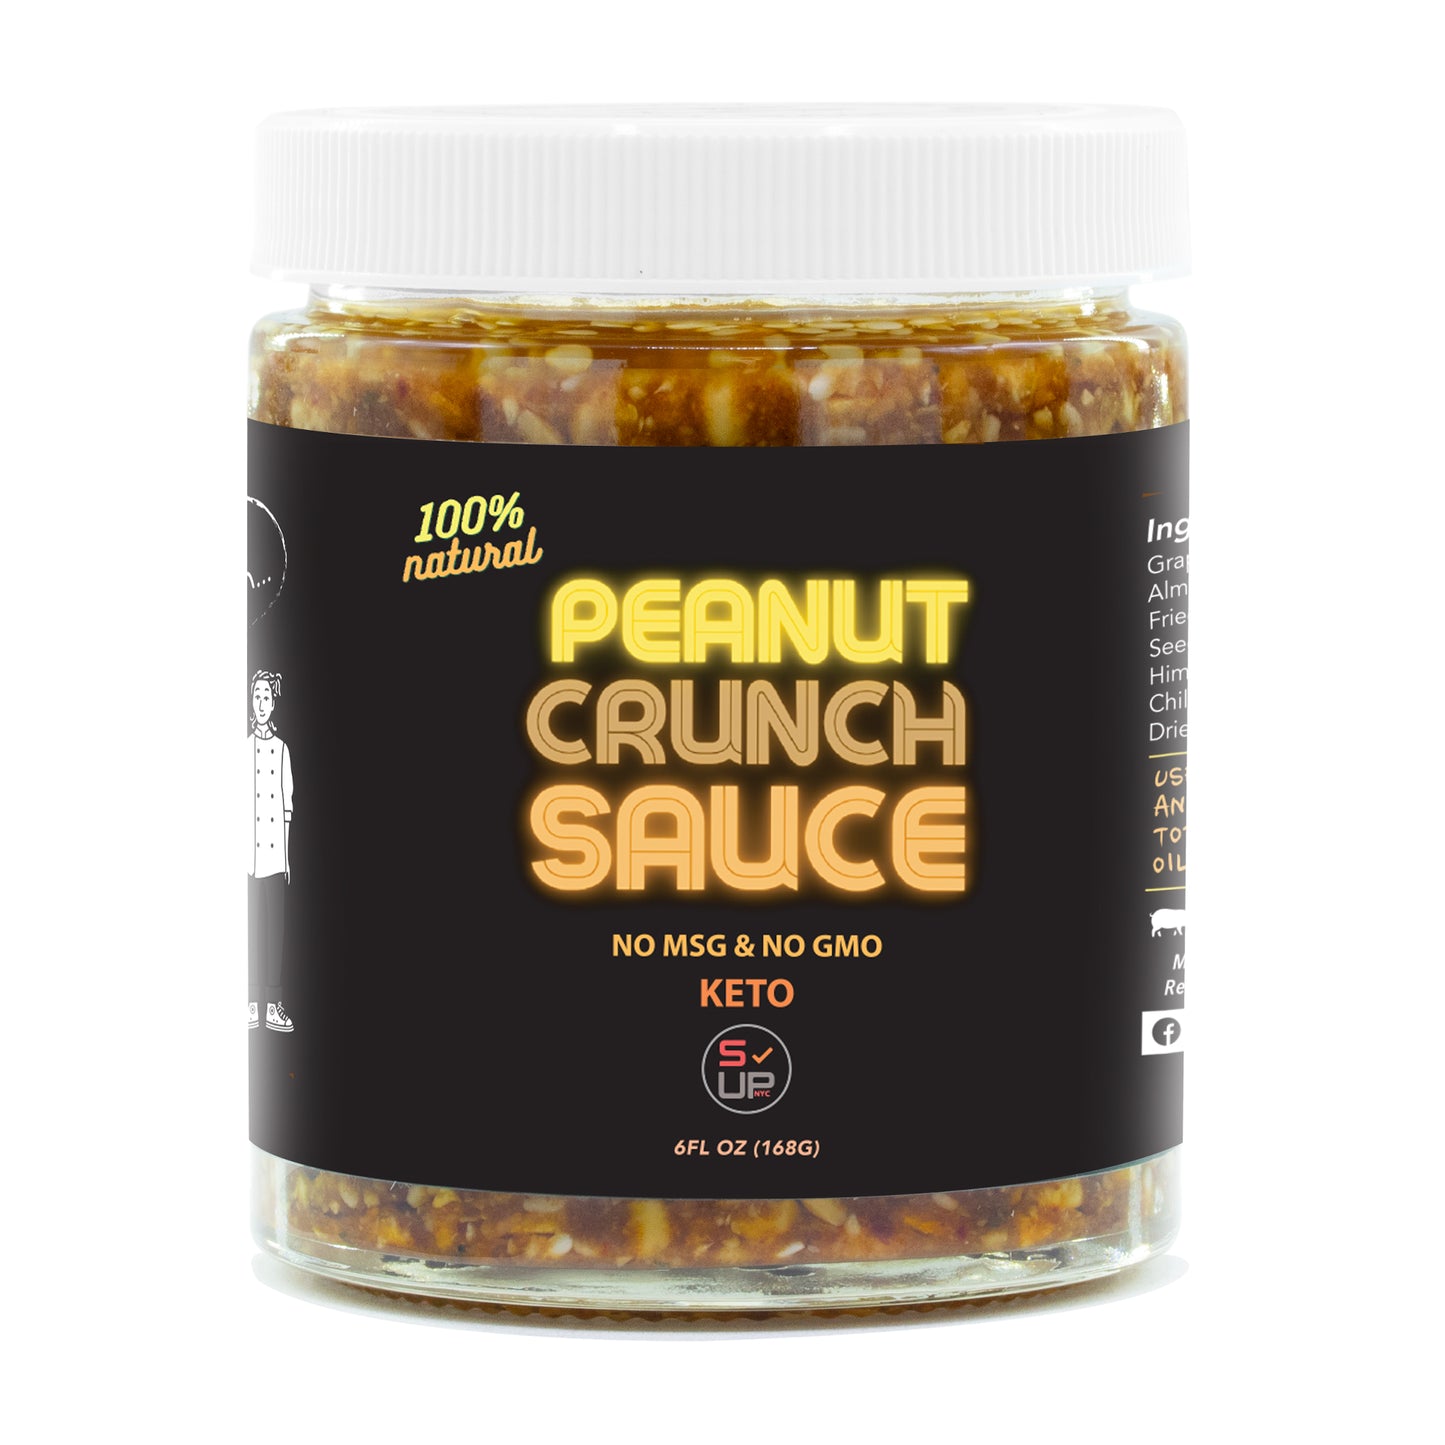 Peanut Crunch Sauce